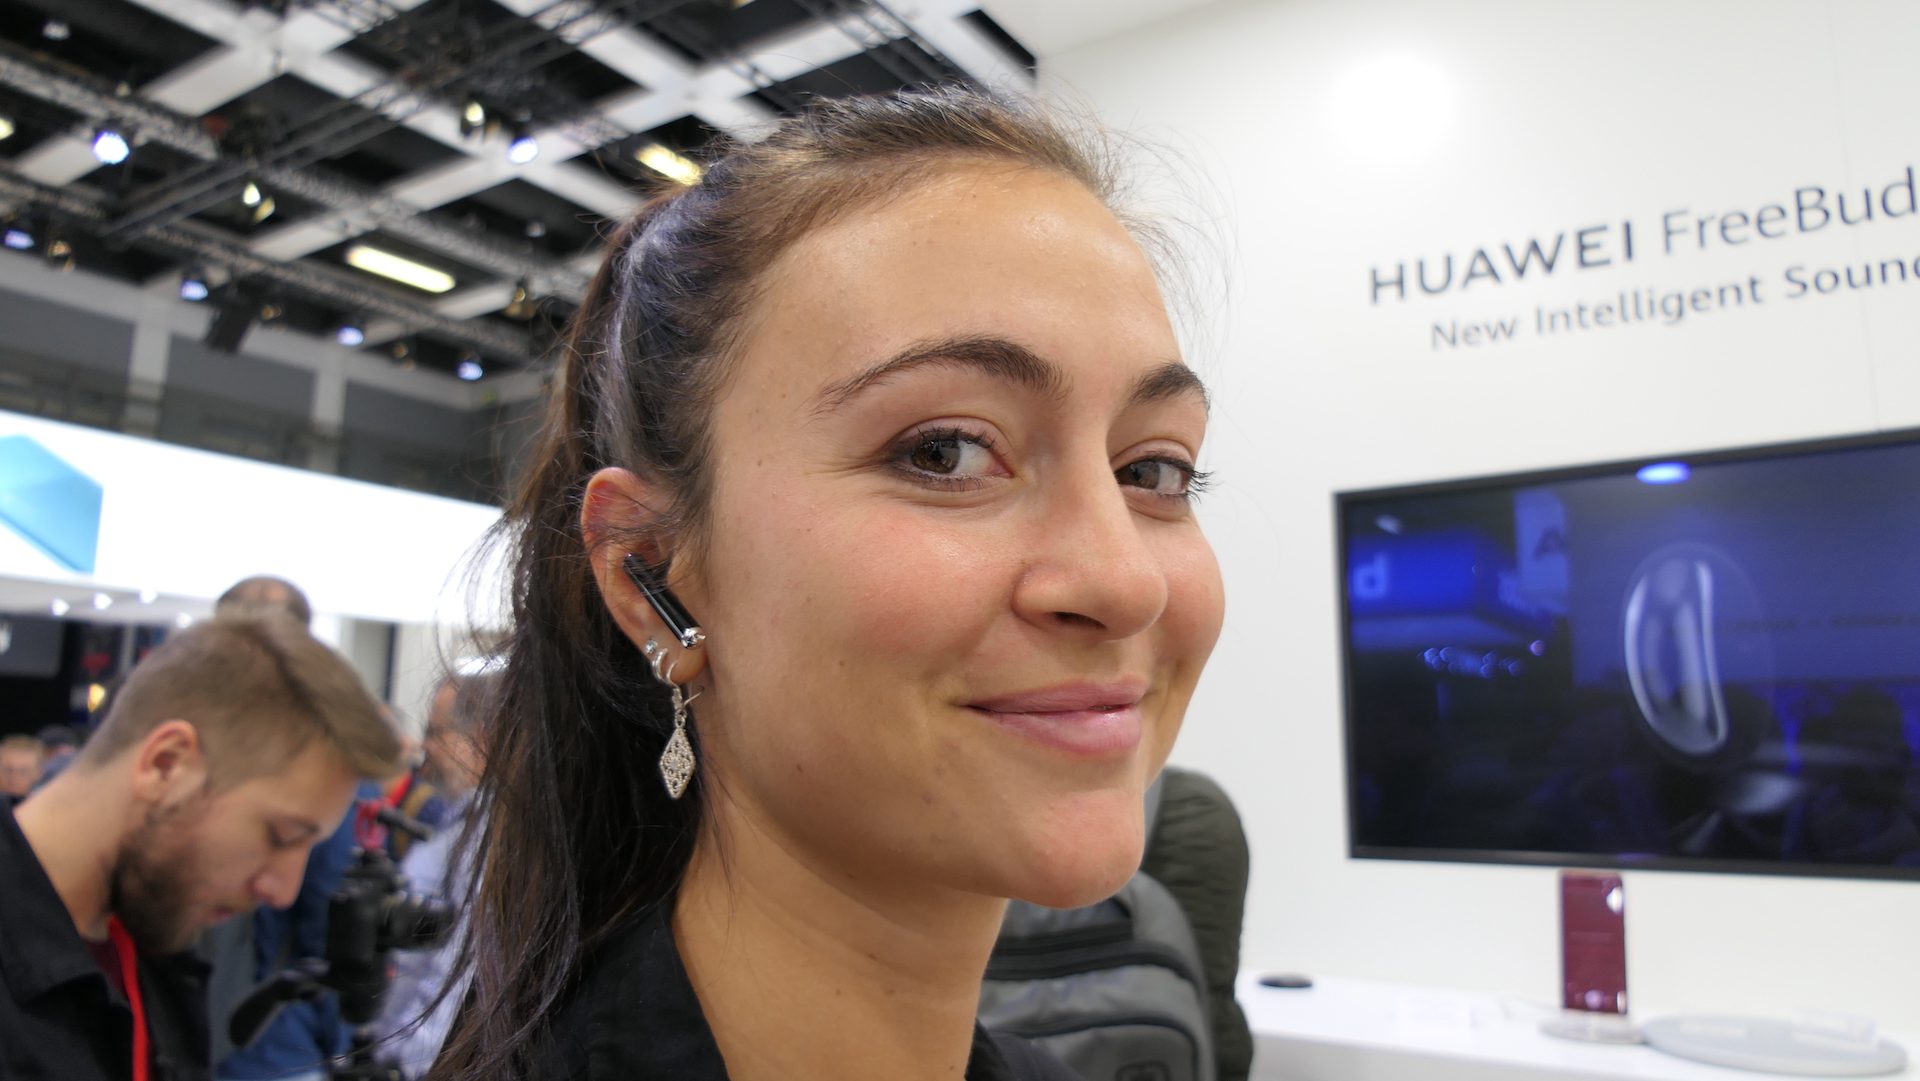 IFA 2019: Huawei FreeBuds 3 tager kampen op mod Apples AirPods